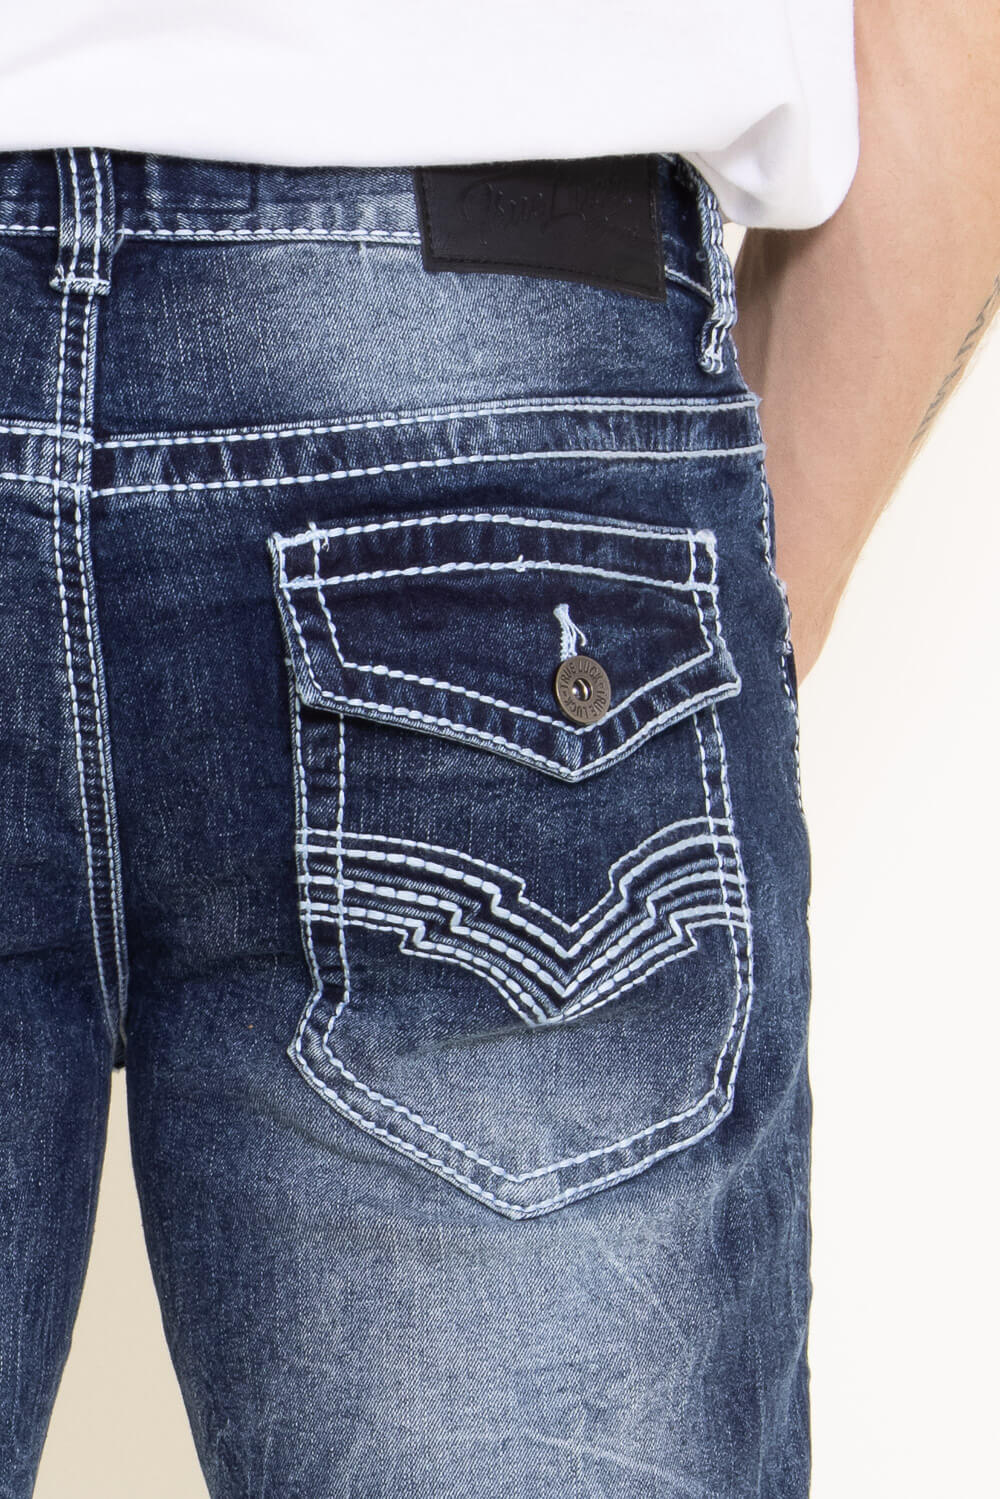 True Luck Samson Bootcut Jeans for Men